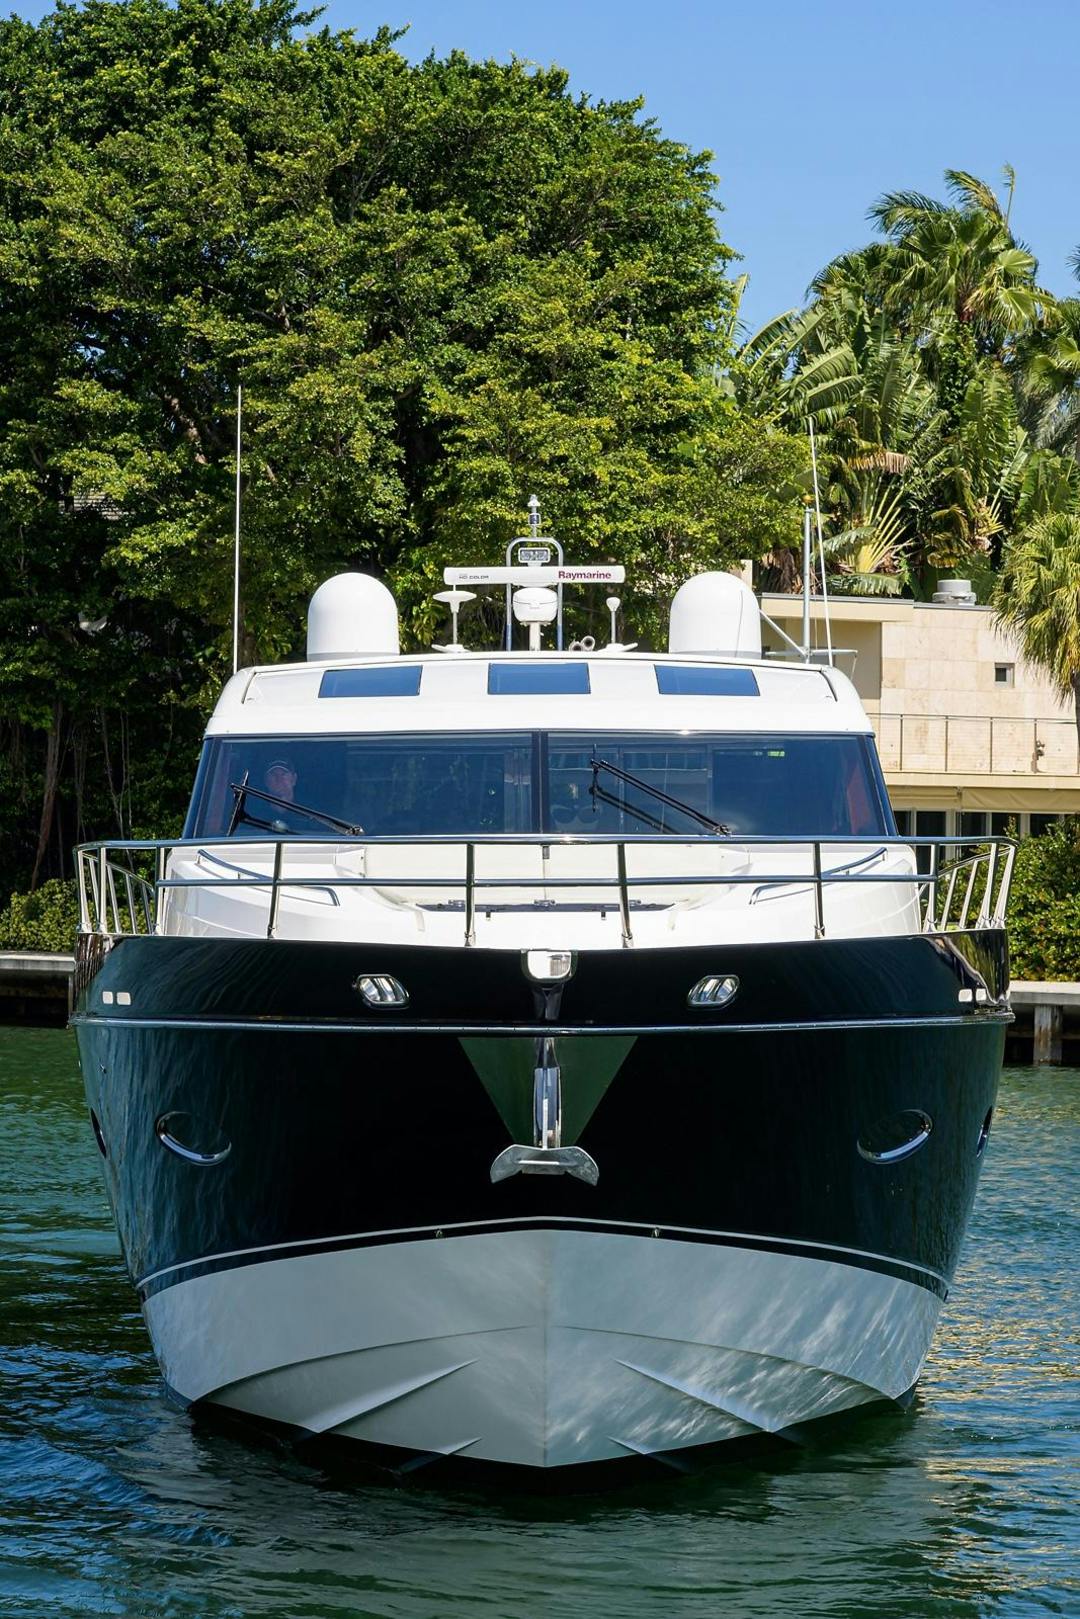 72 Princess luxury charter yacht - St. Barths, Saint Barthélemy